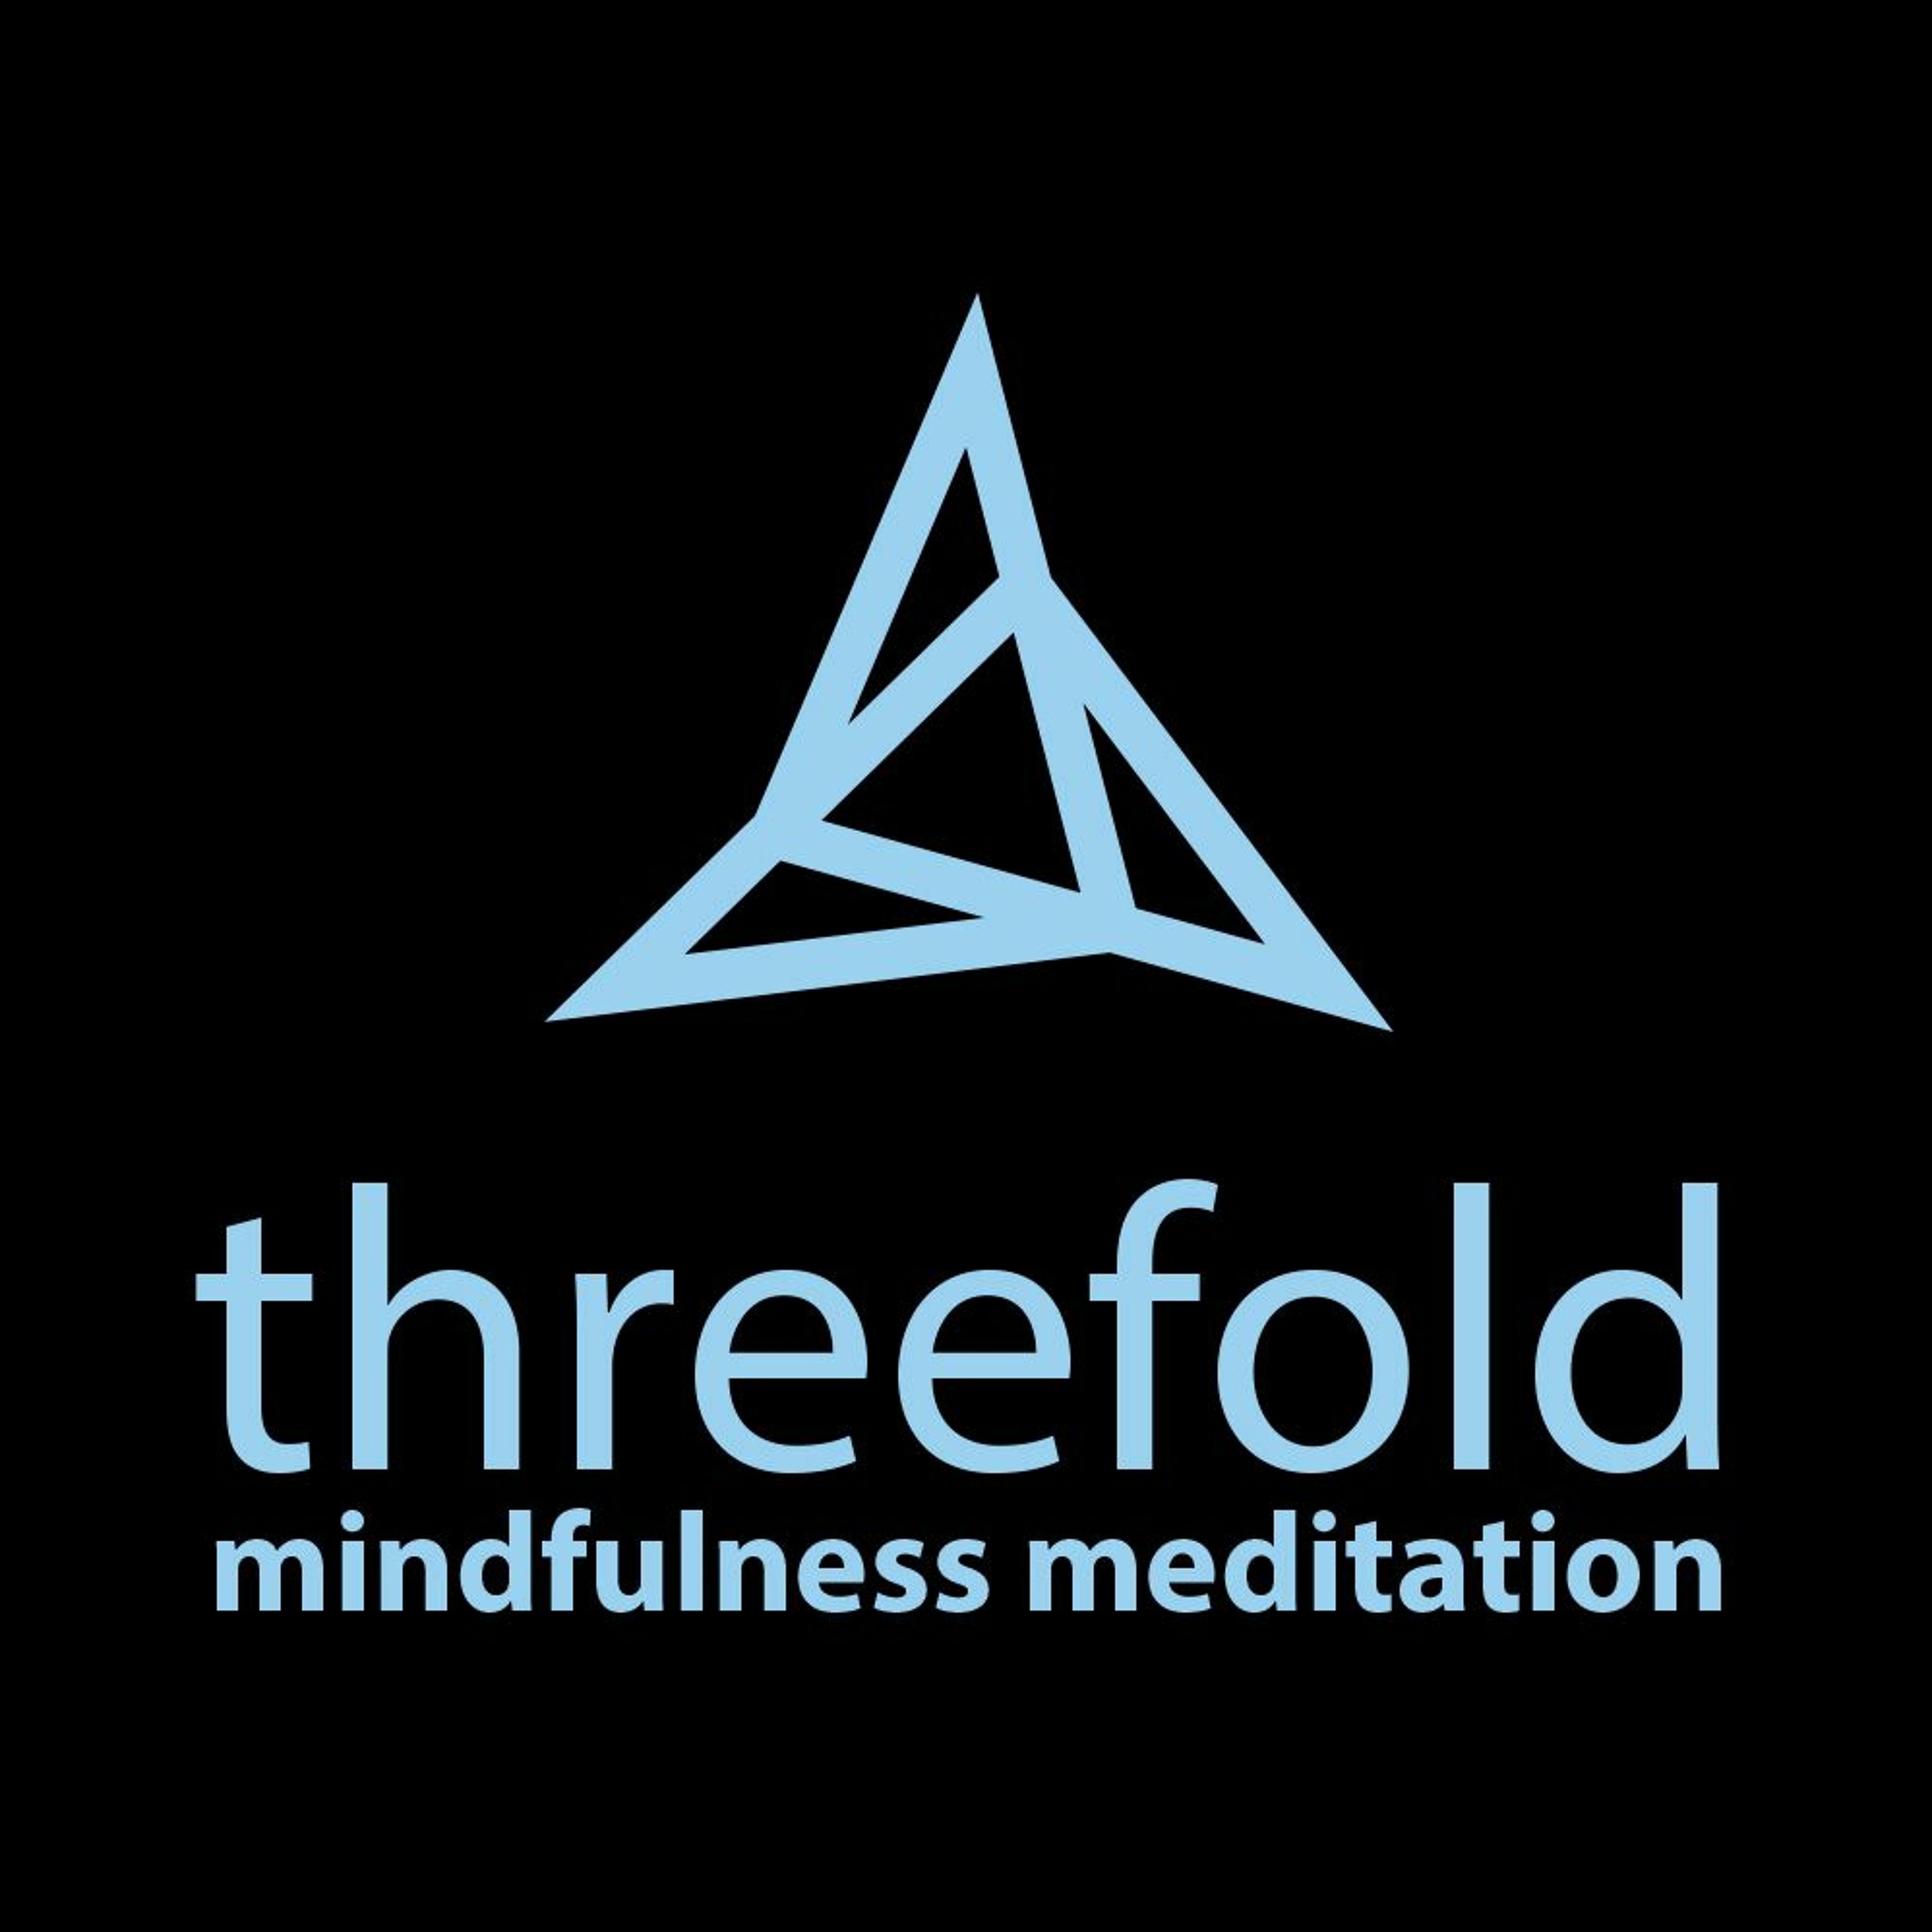 Audio Only - Threefold Mindfulness Meditation - Unguided Meditation